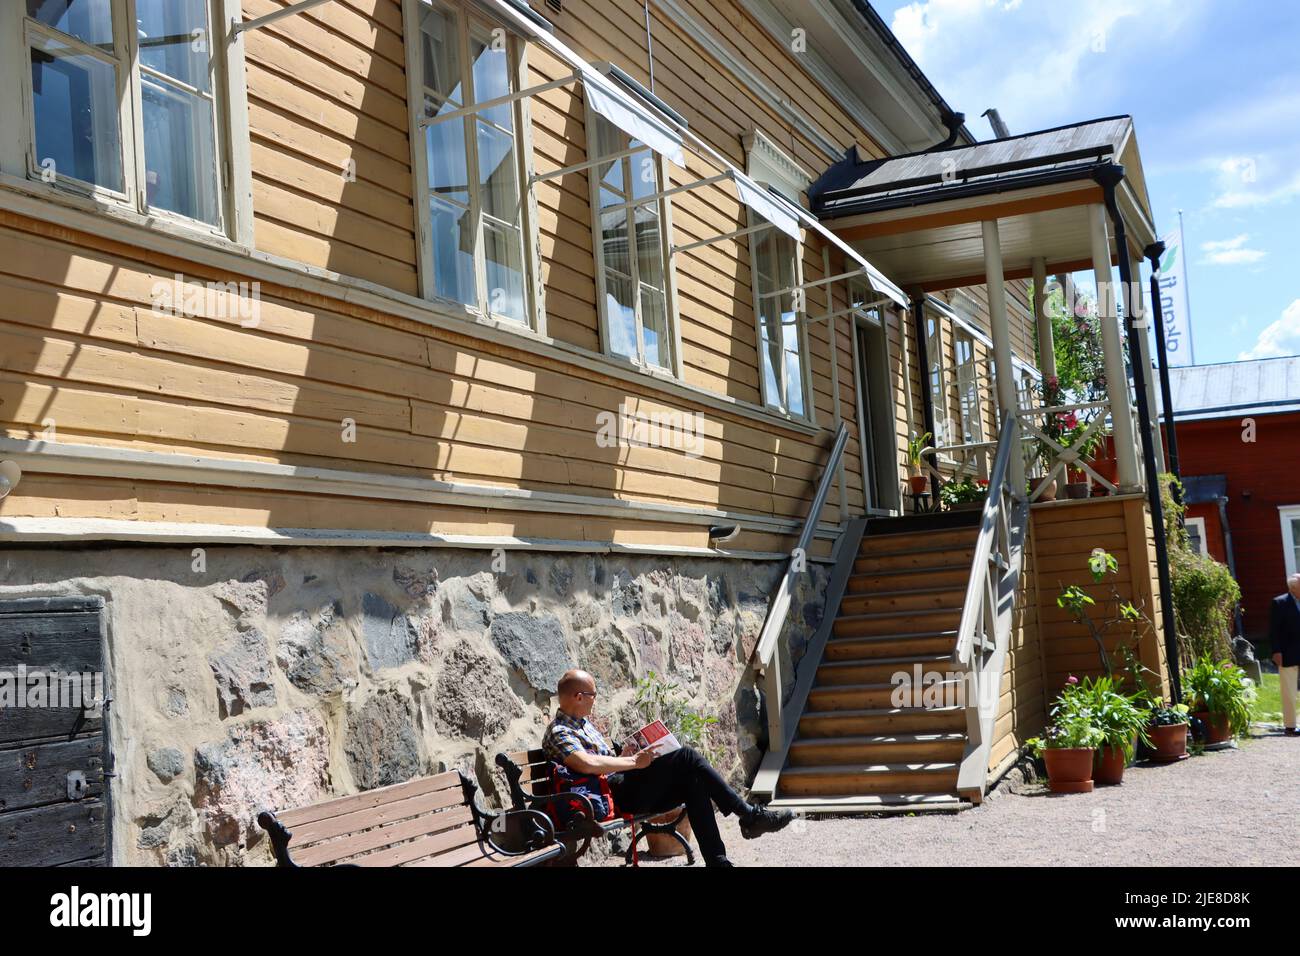 National poet Johan Ludvig Runeberg's home and garden in Porvoo, Finland Stock Photo